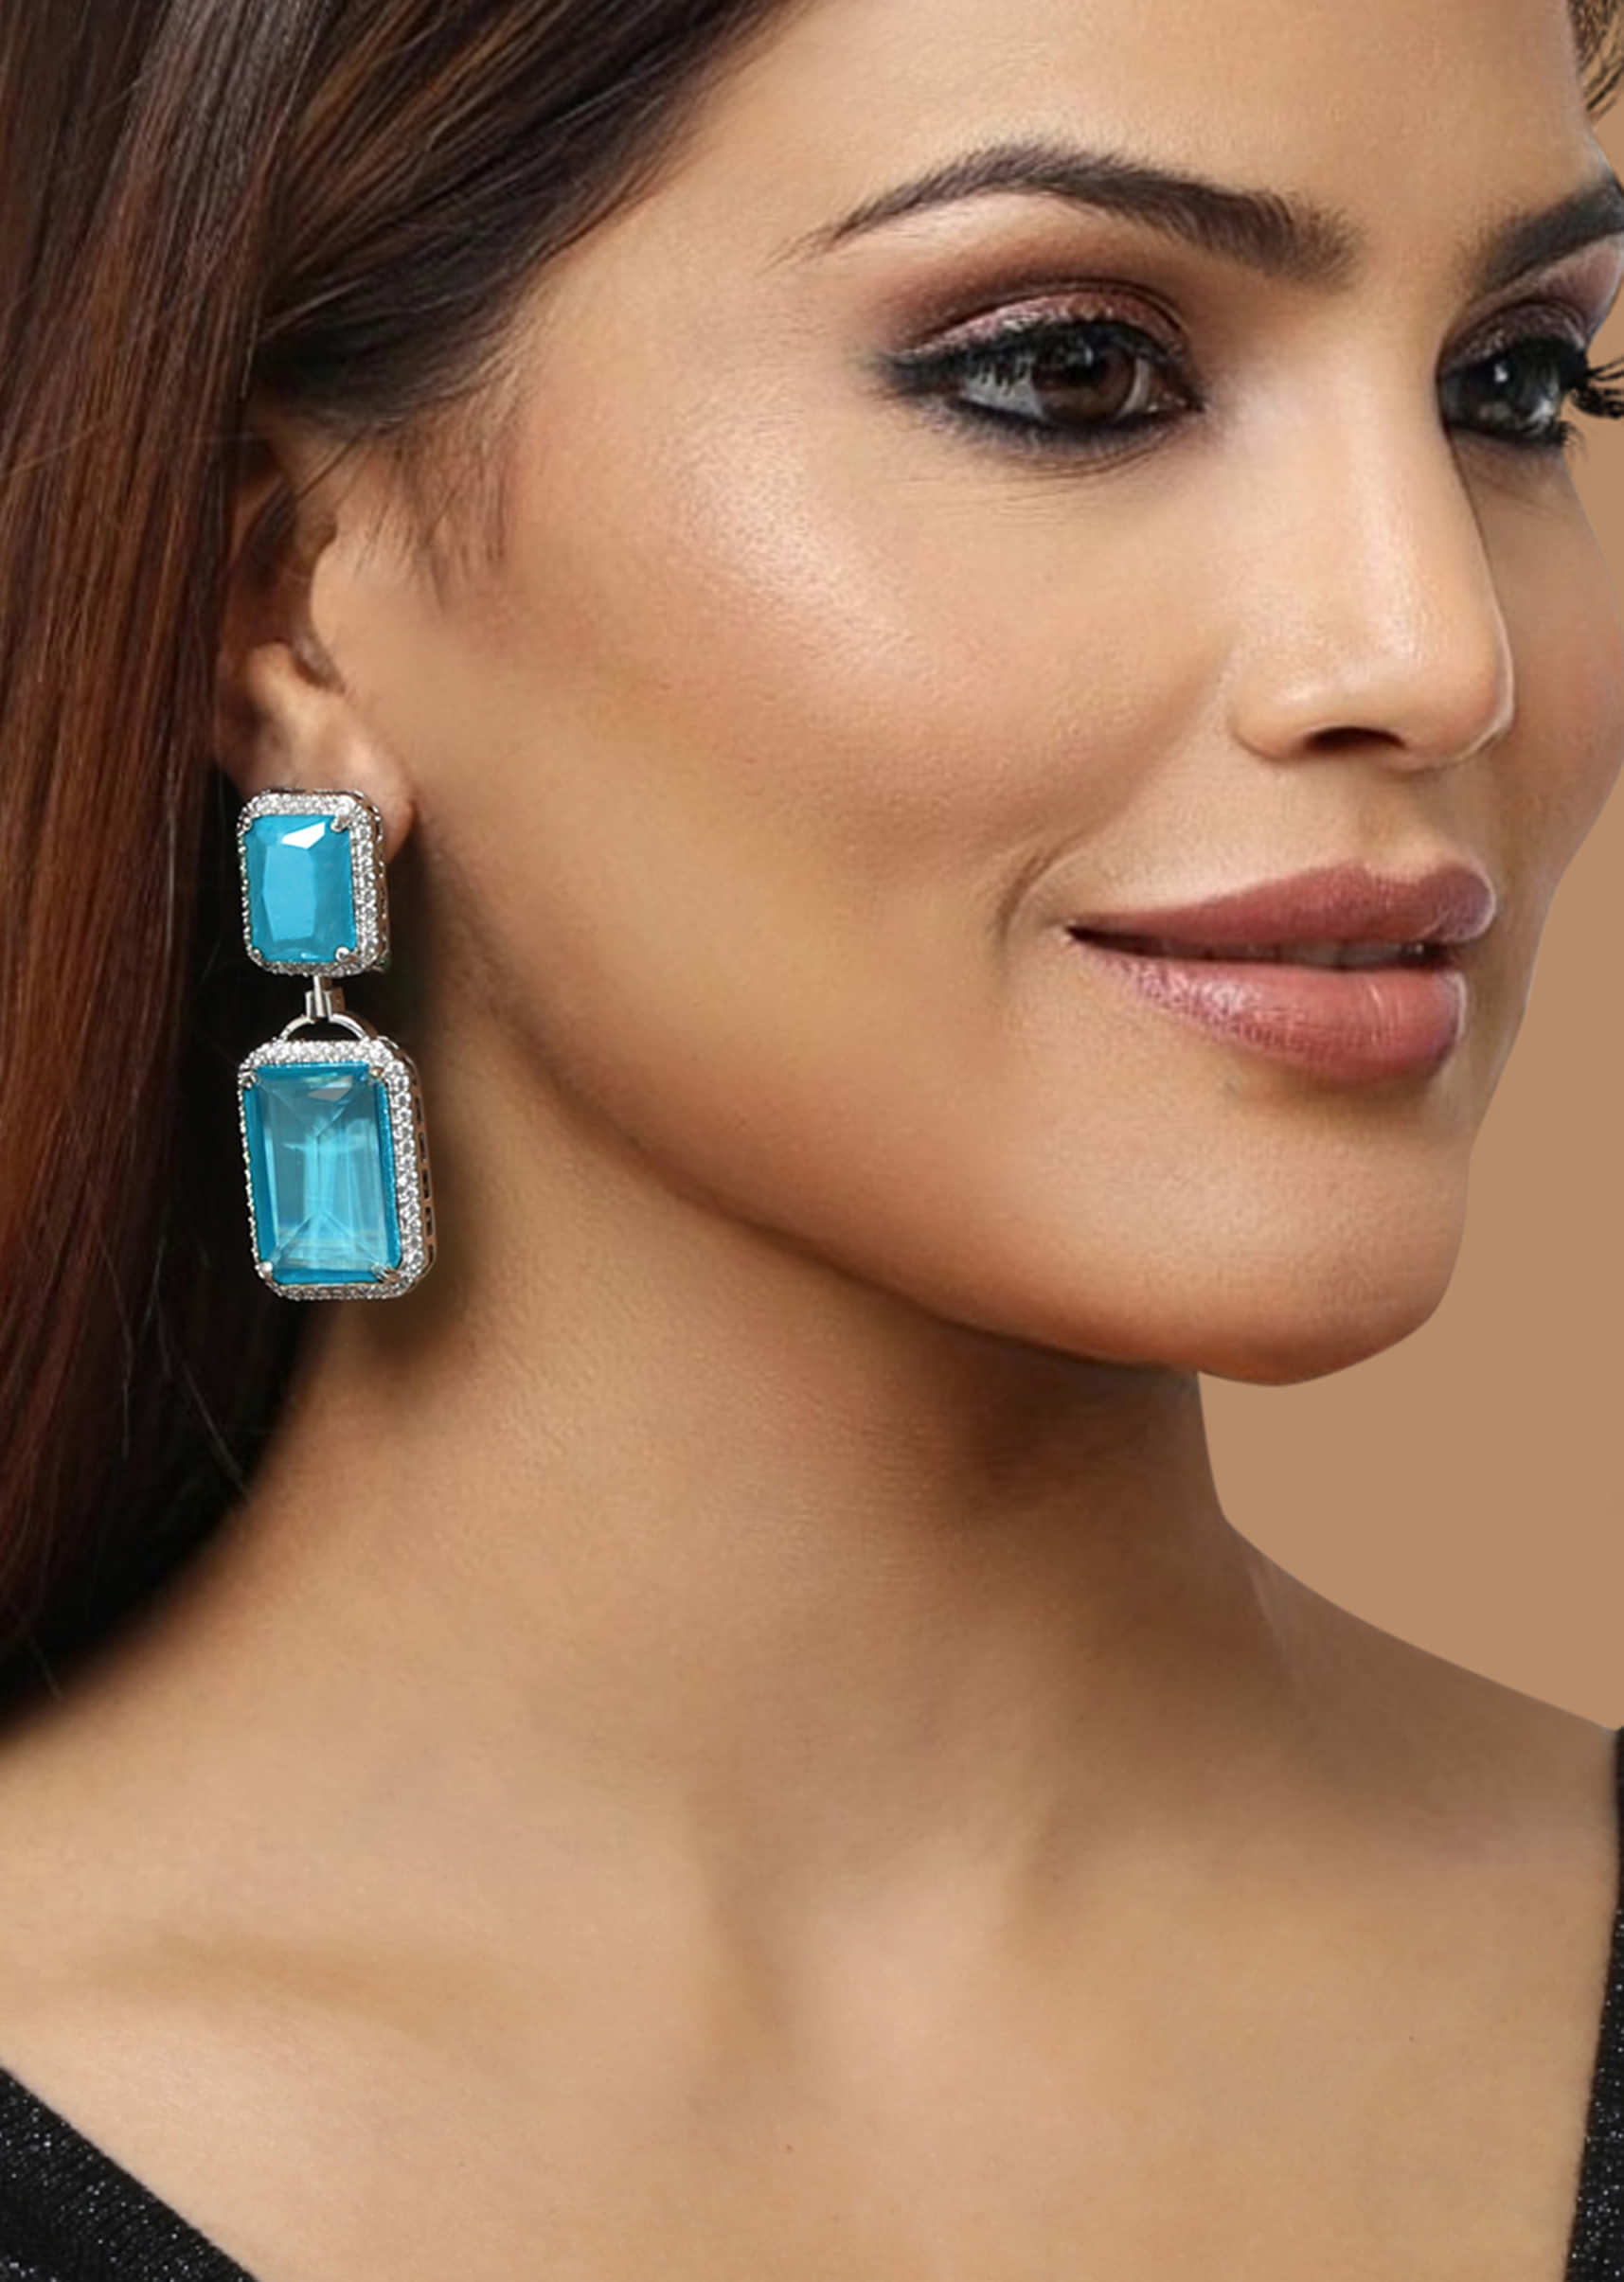 2 Aquamarine Stones Dangled Earrings With Faux Diamonds